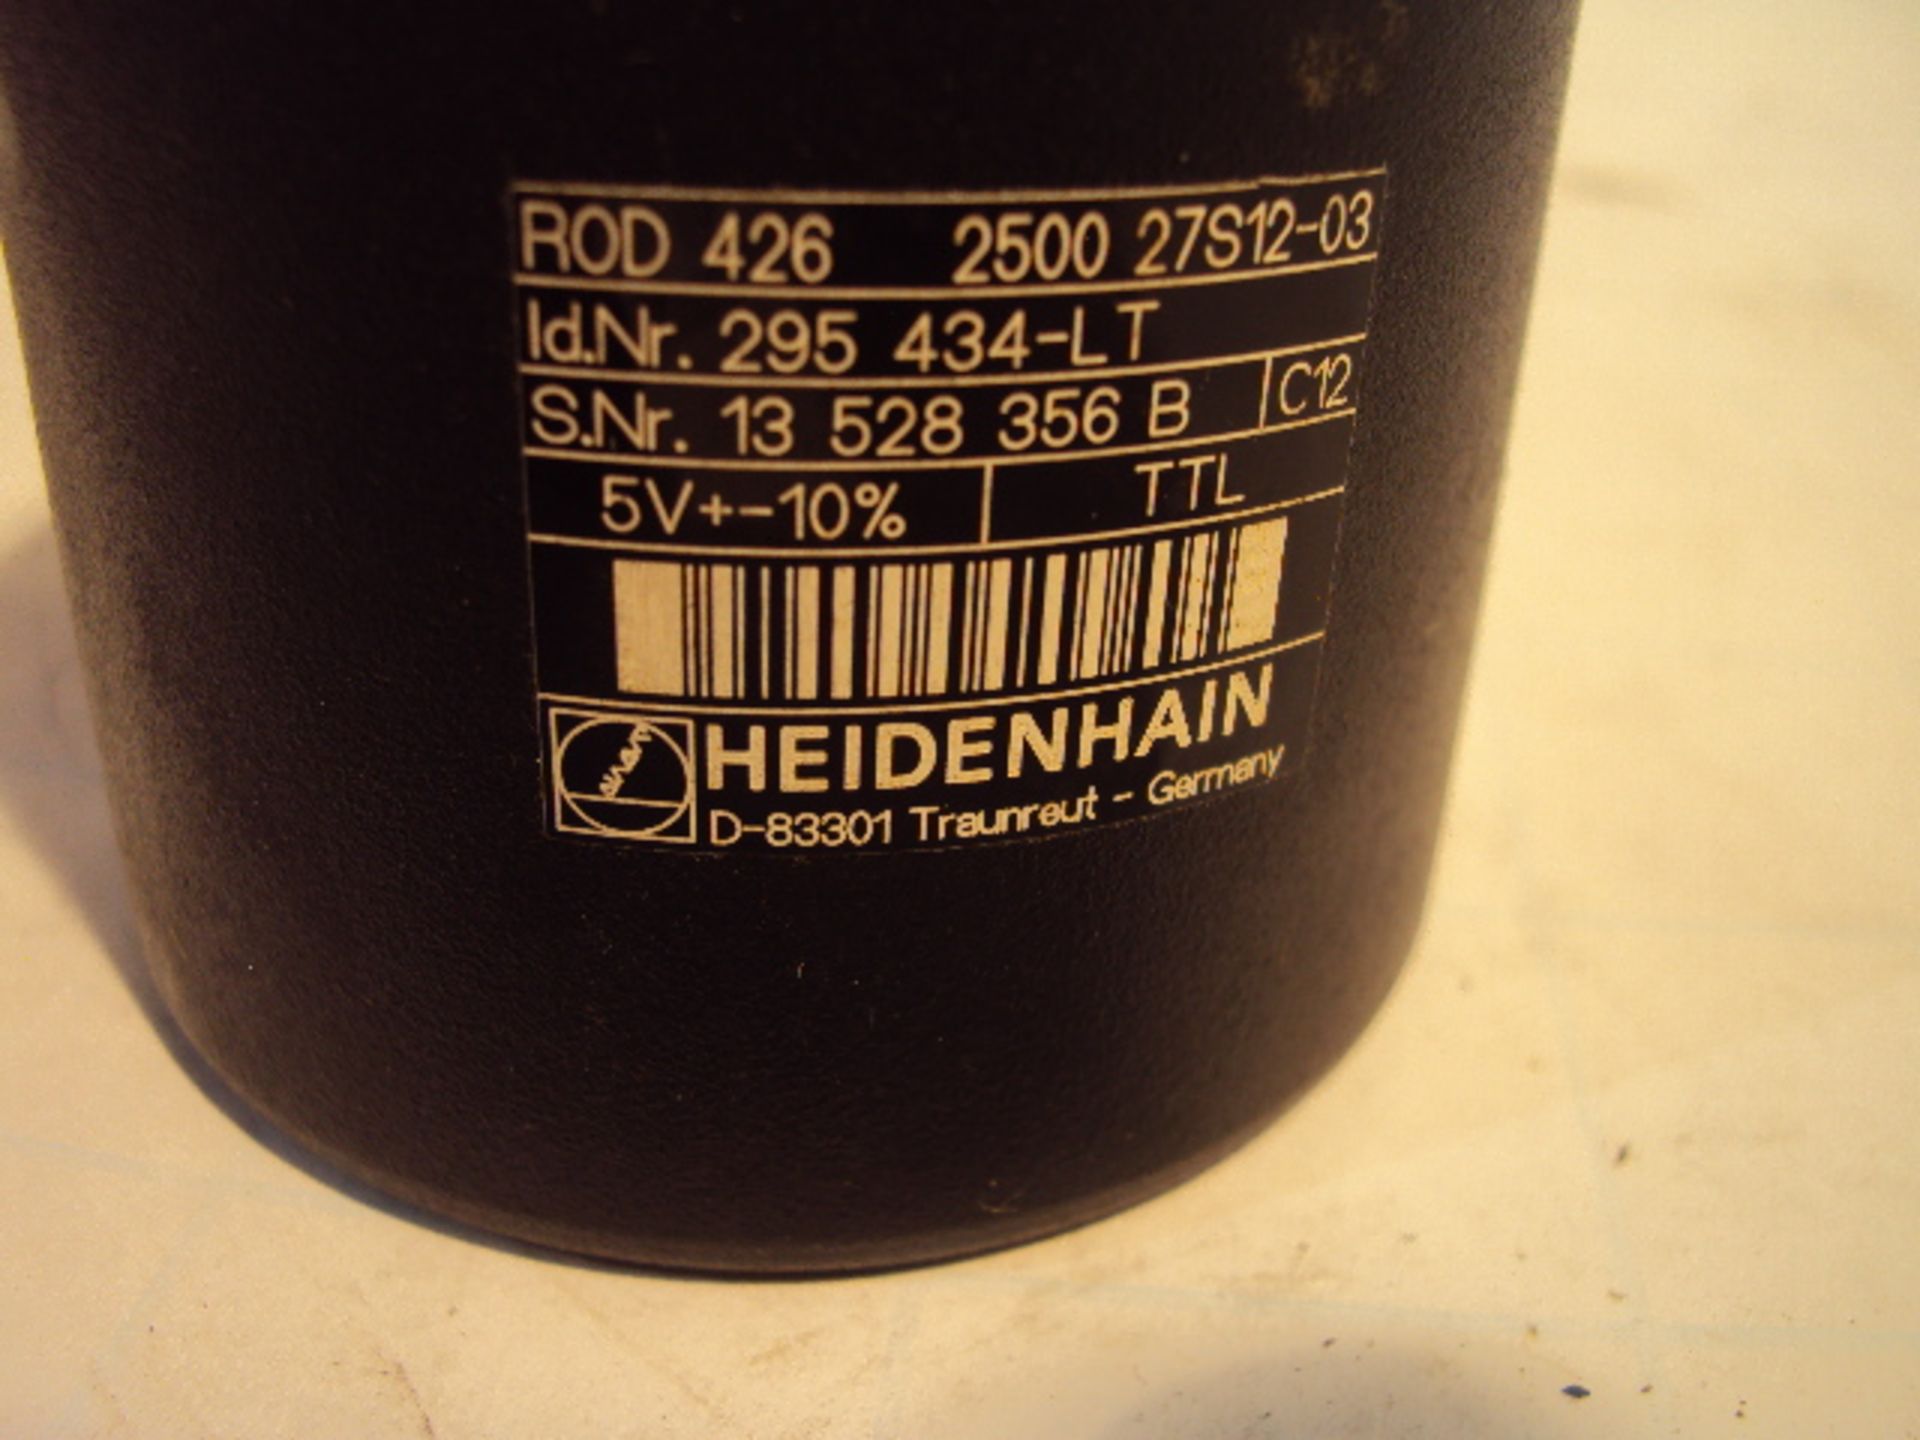 Heidenhain ROD-426.2500-27S12-03 Rotary Optical Encoder - Image 3 of 3